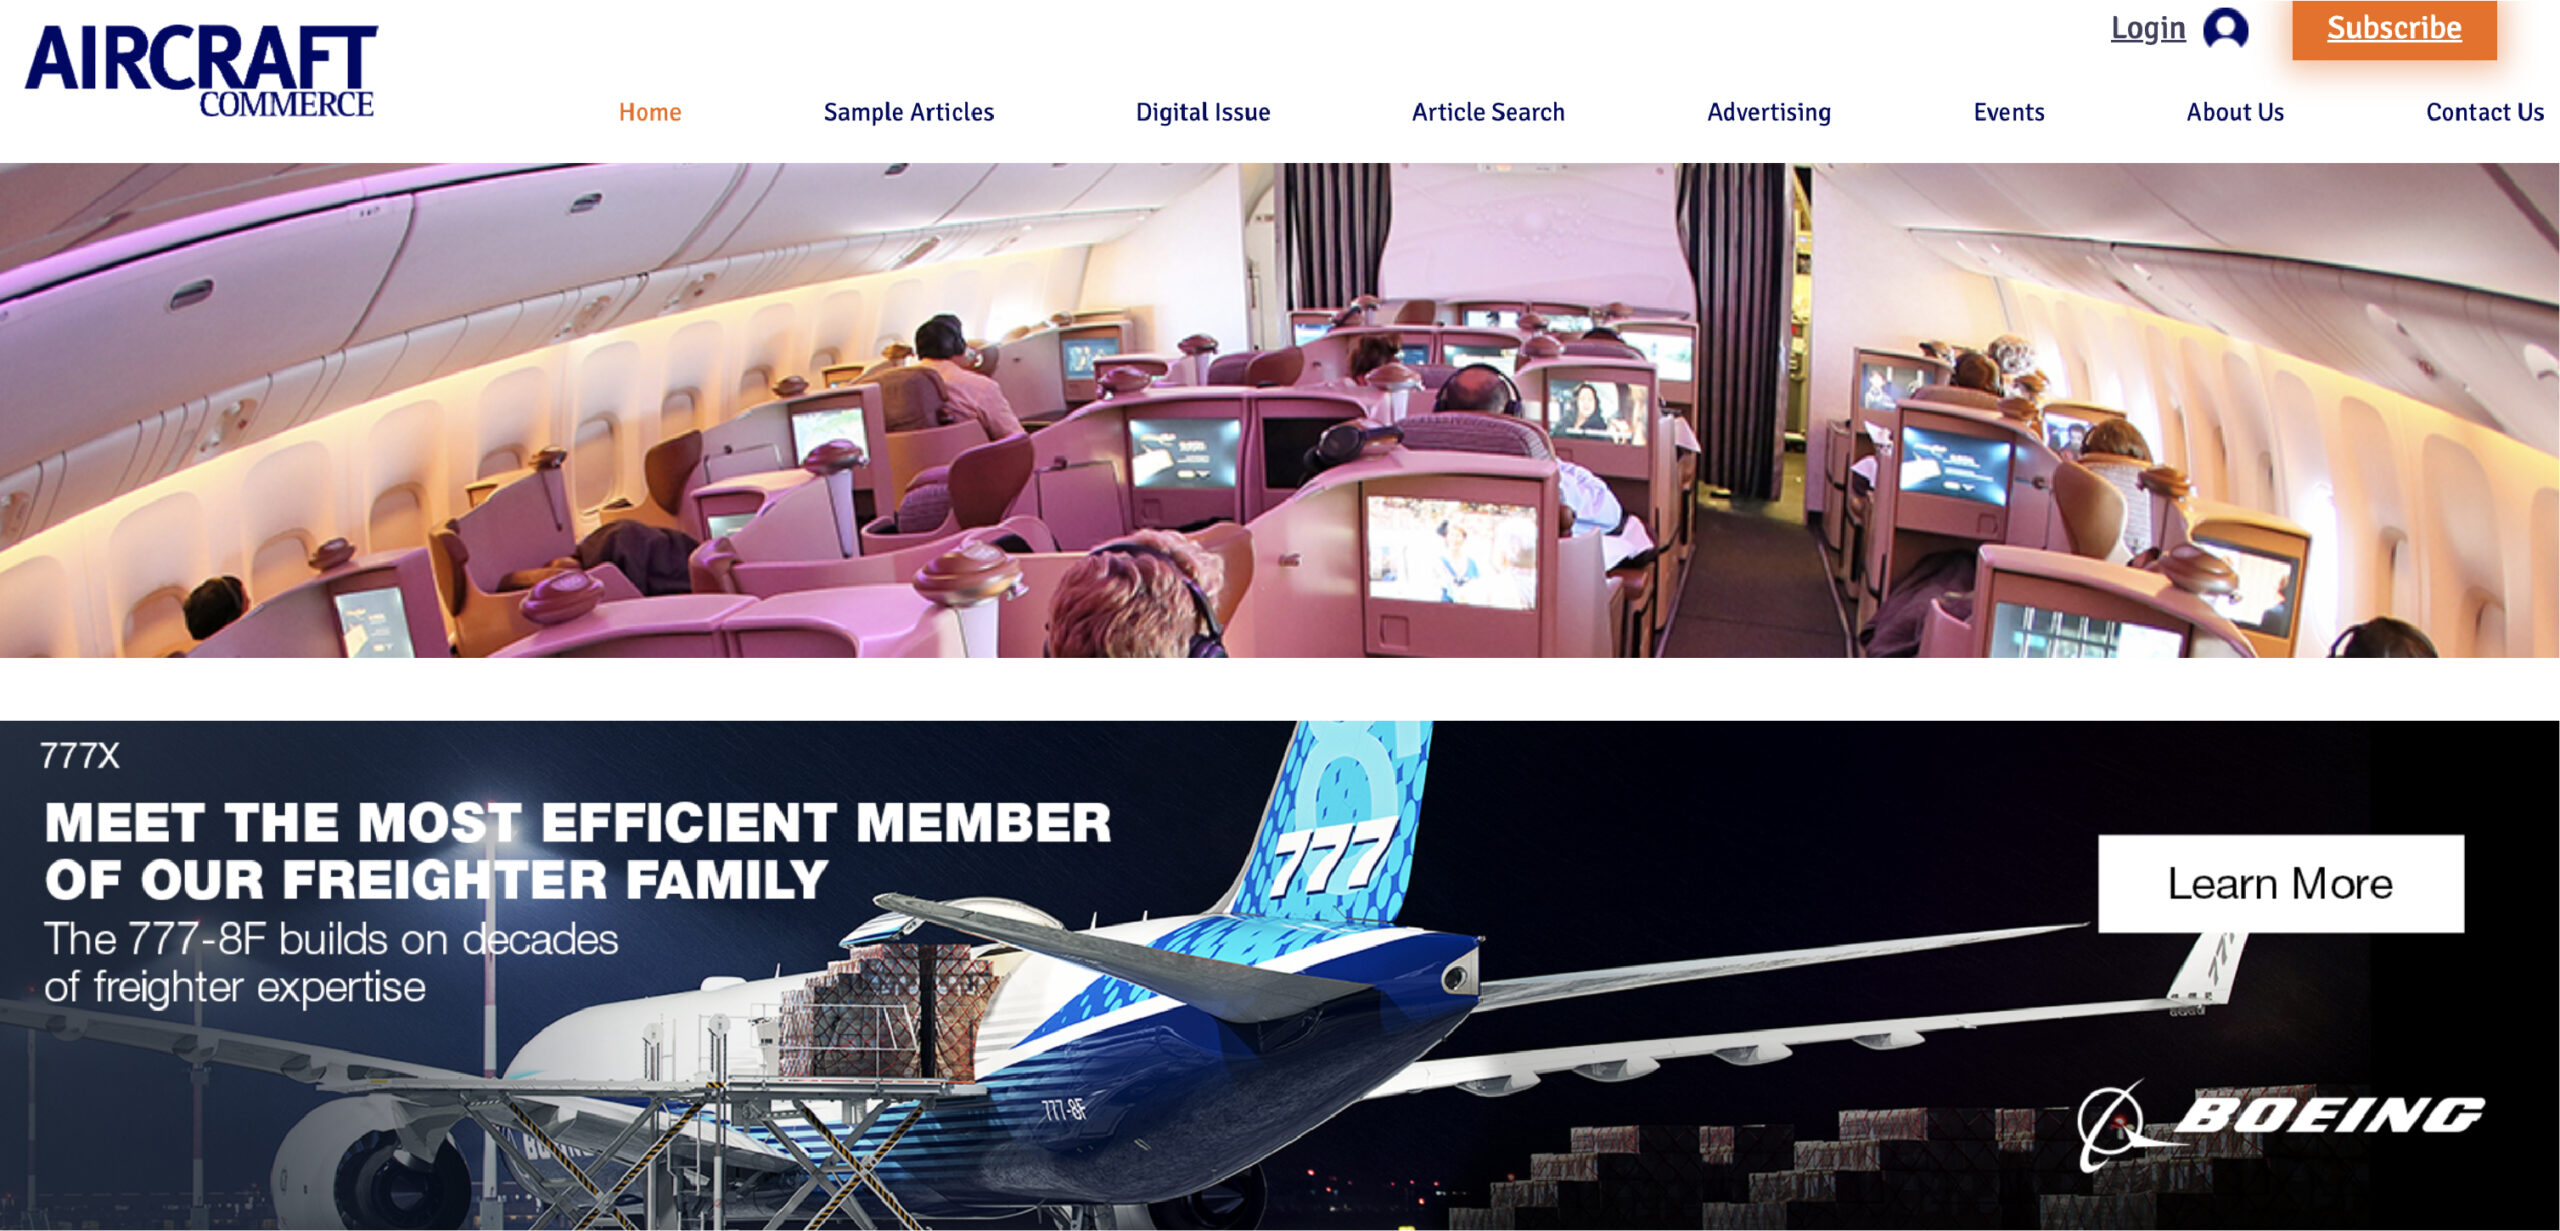 Aircraft Commerce Website